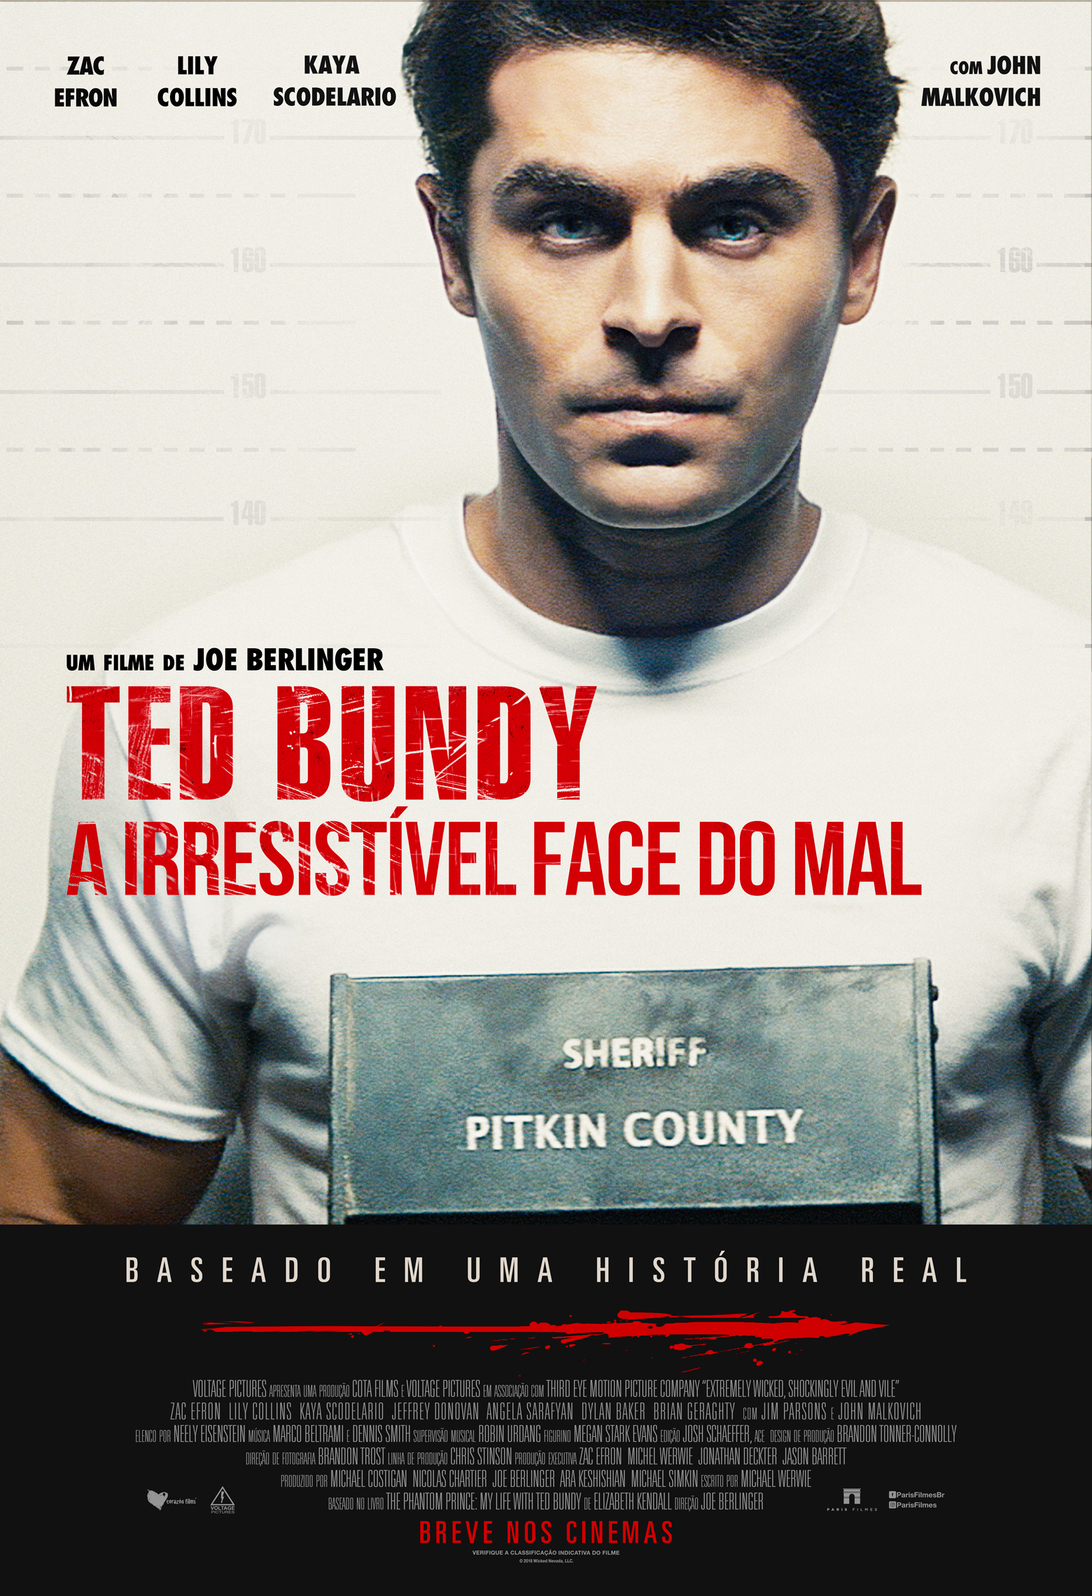 Ted Bundy: A Irresistível Face do Mal